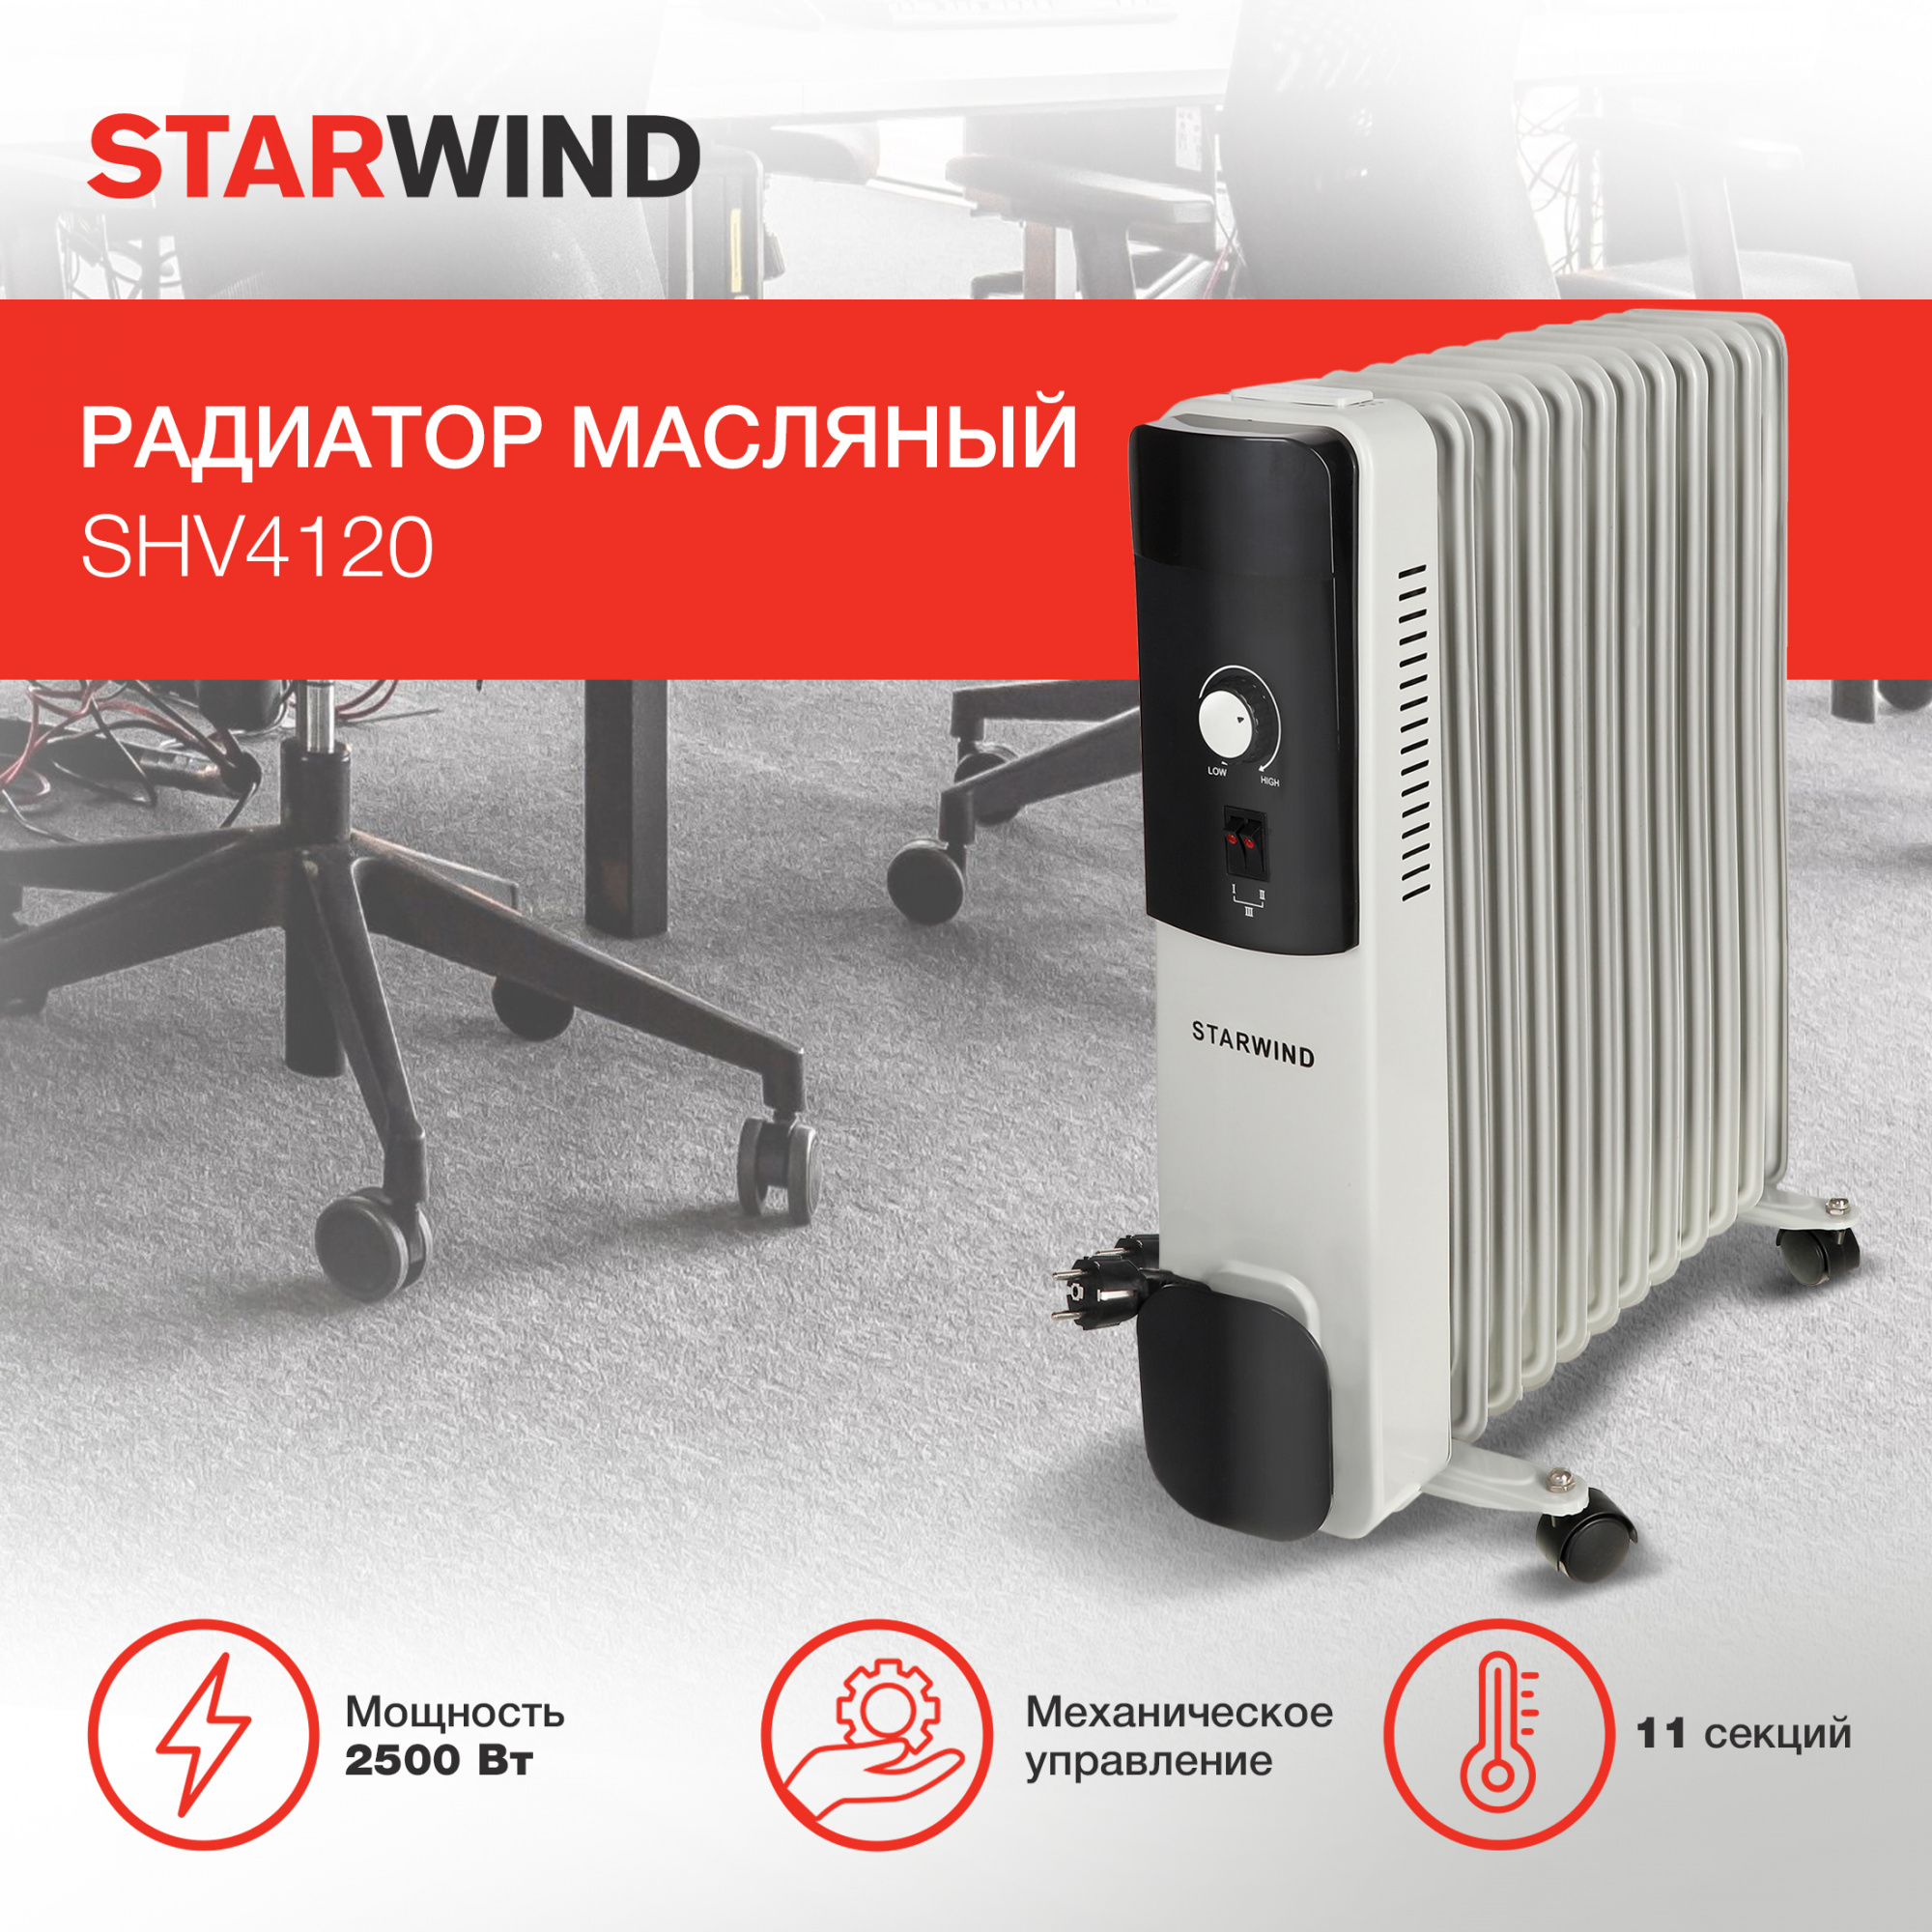 Масляный радиатор Starwind SHV4120 белый/черный от магазина Старвинд